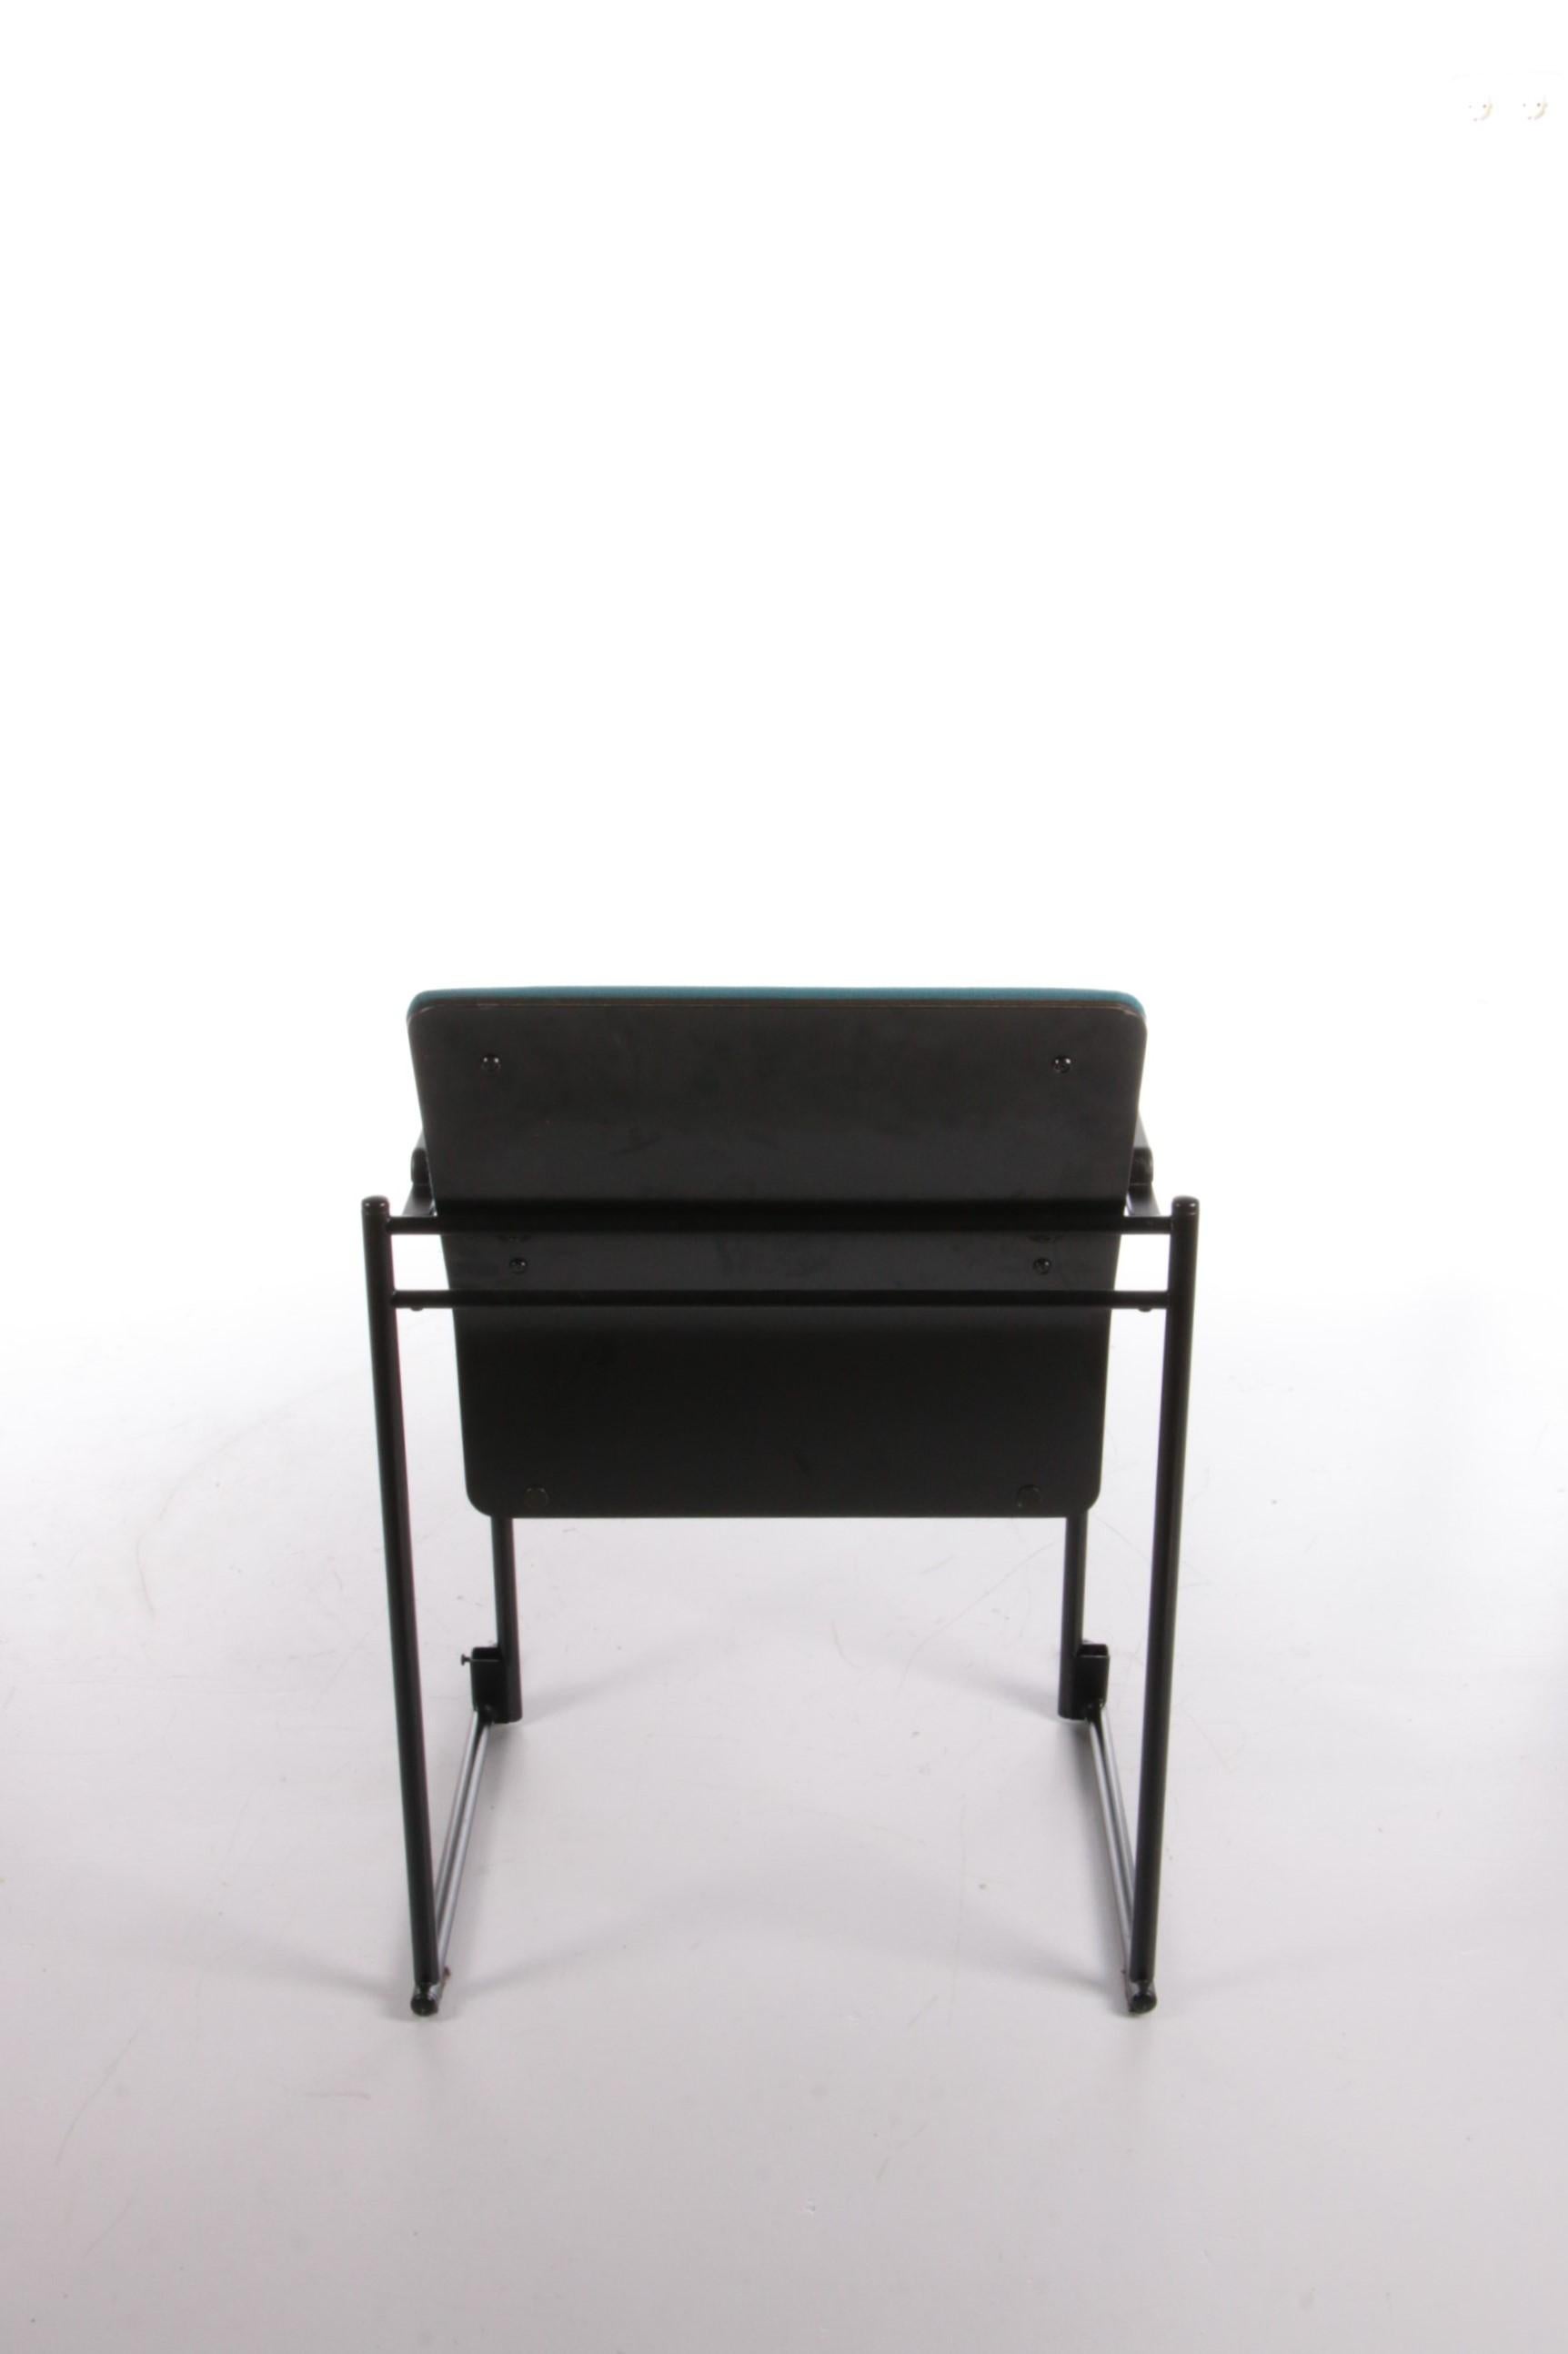 Late 20th Century Yrjö Kukkapuro Fabric Dining Chair Made by Avarte, Finland 1970 For Sale